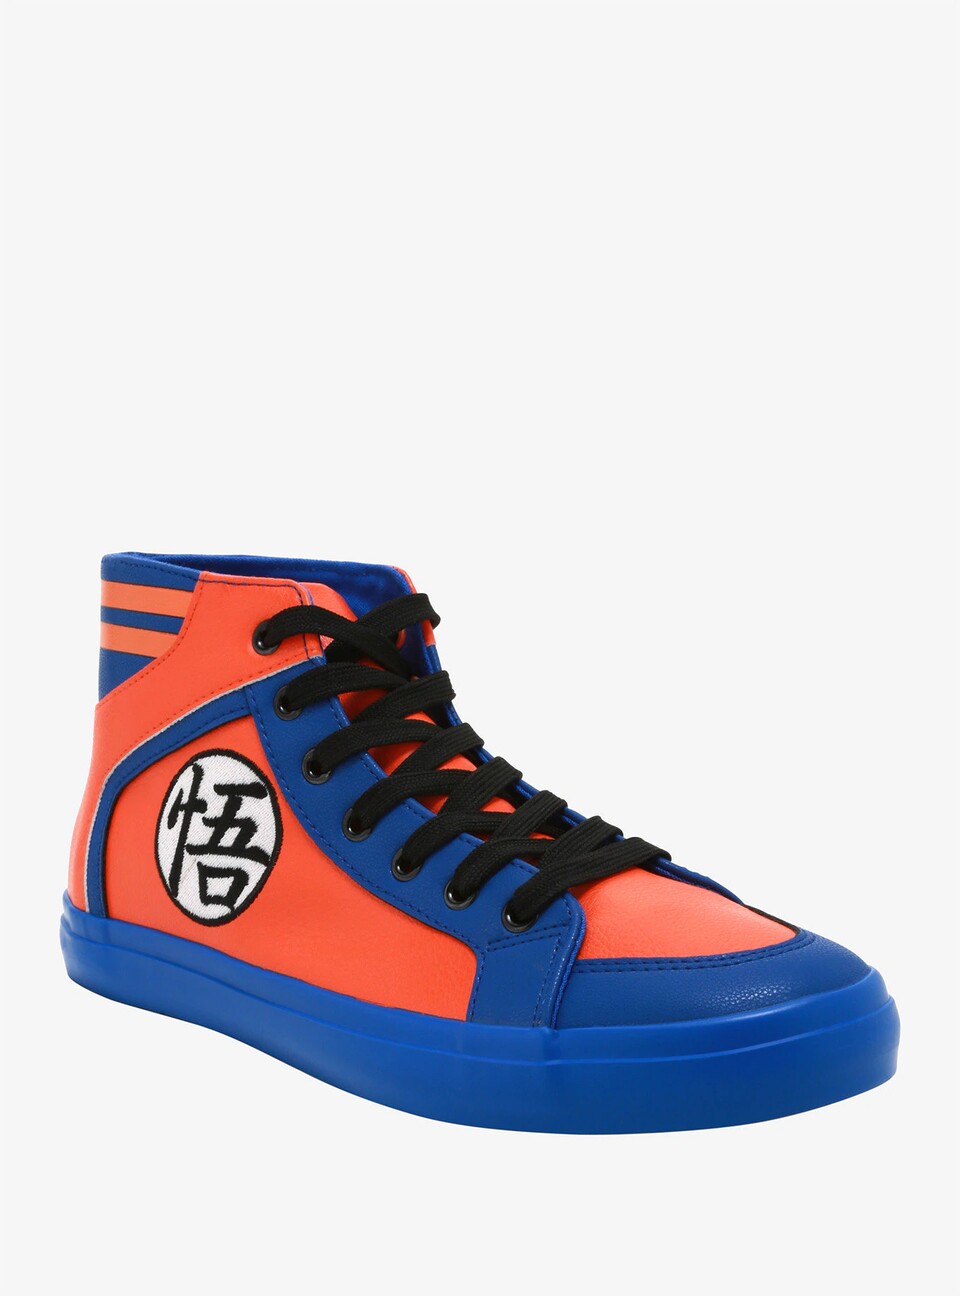 Dragon Ball Z-Schuhe als Hi Top-Version.